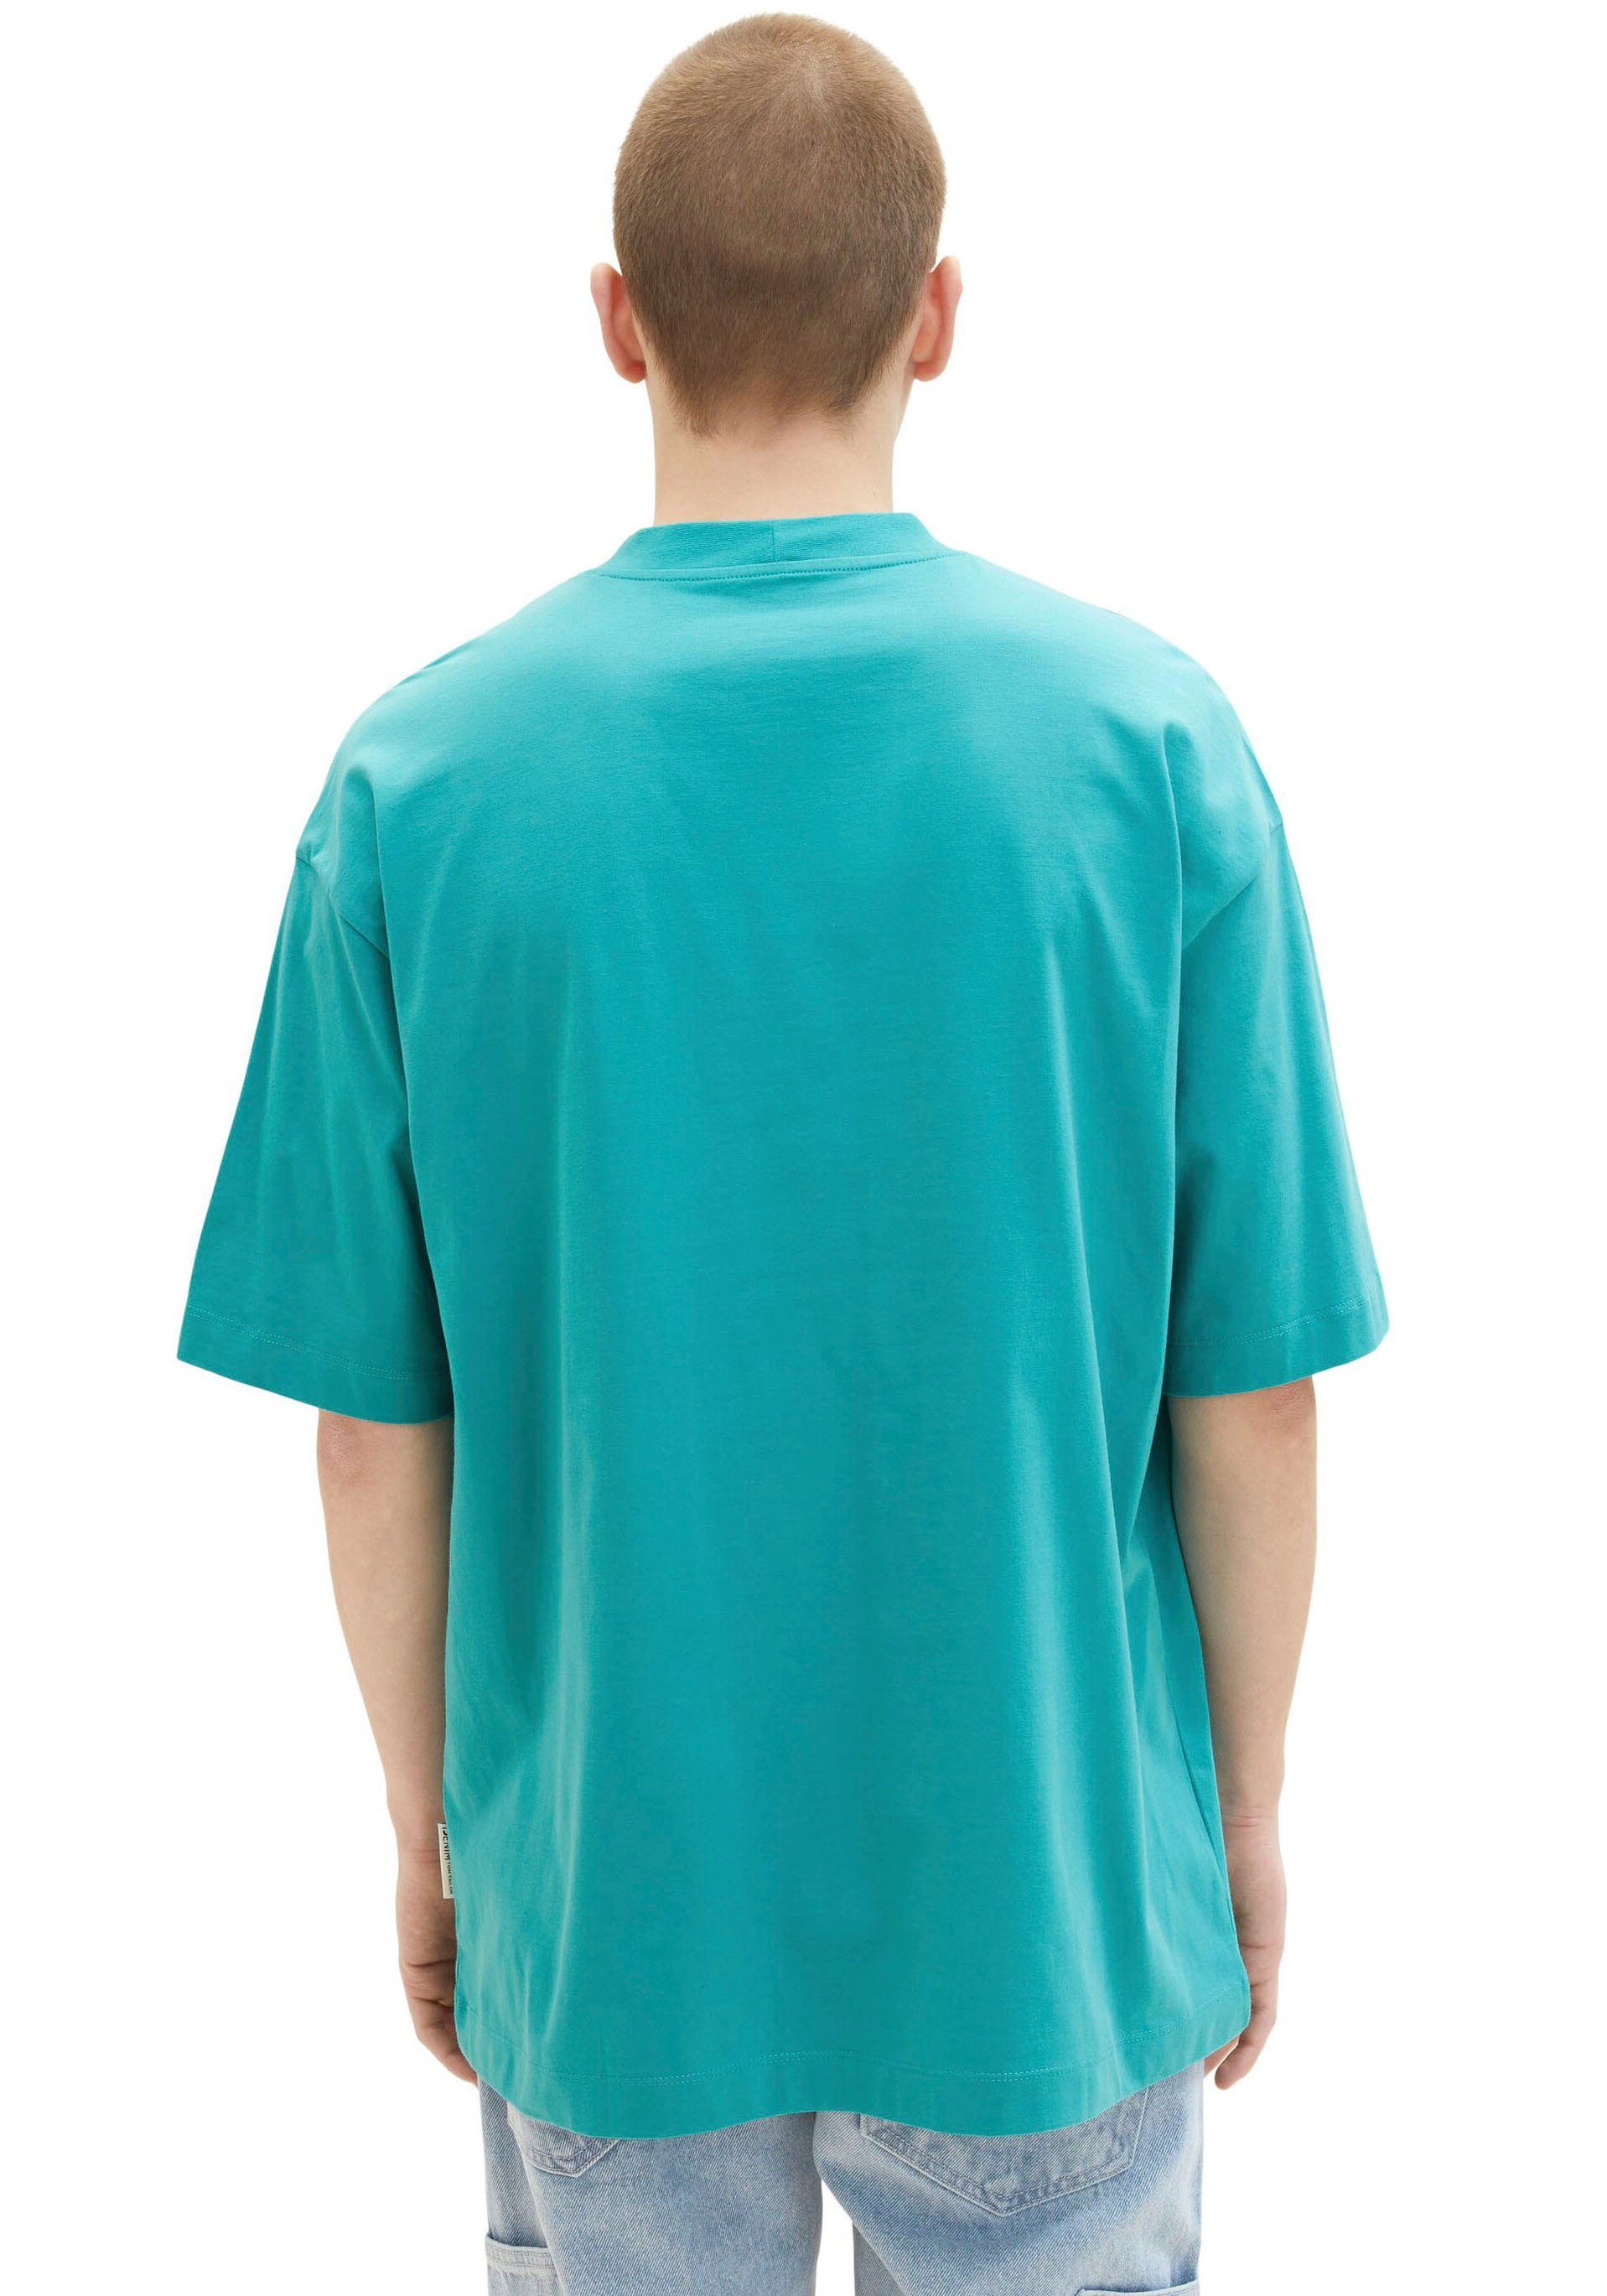 TOM TAILOR Denim Oversize-Shirt mit Chest-Print großem türkis